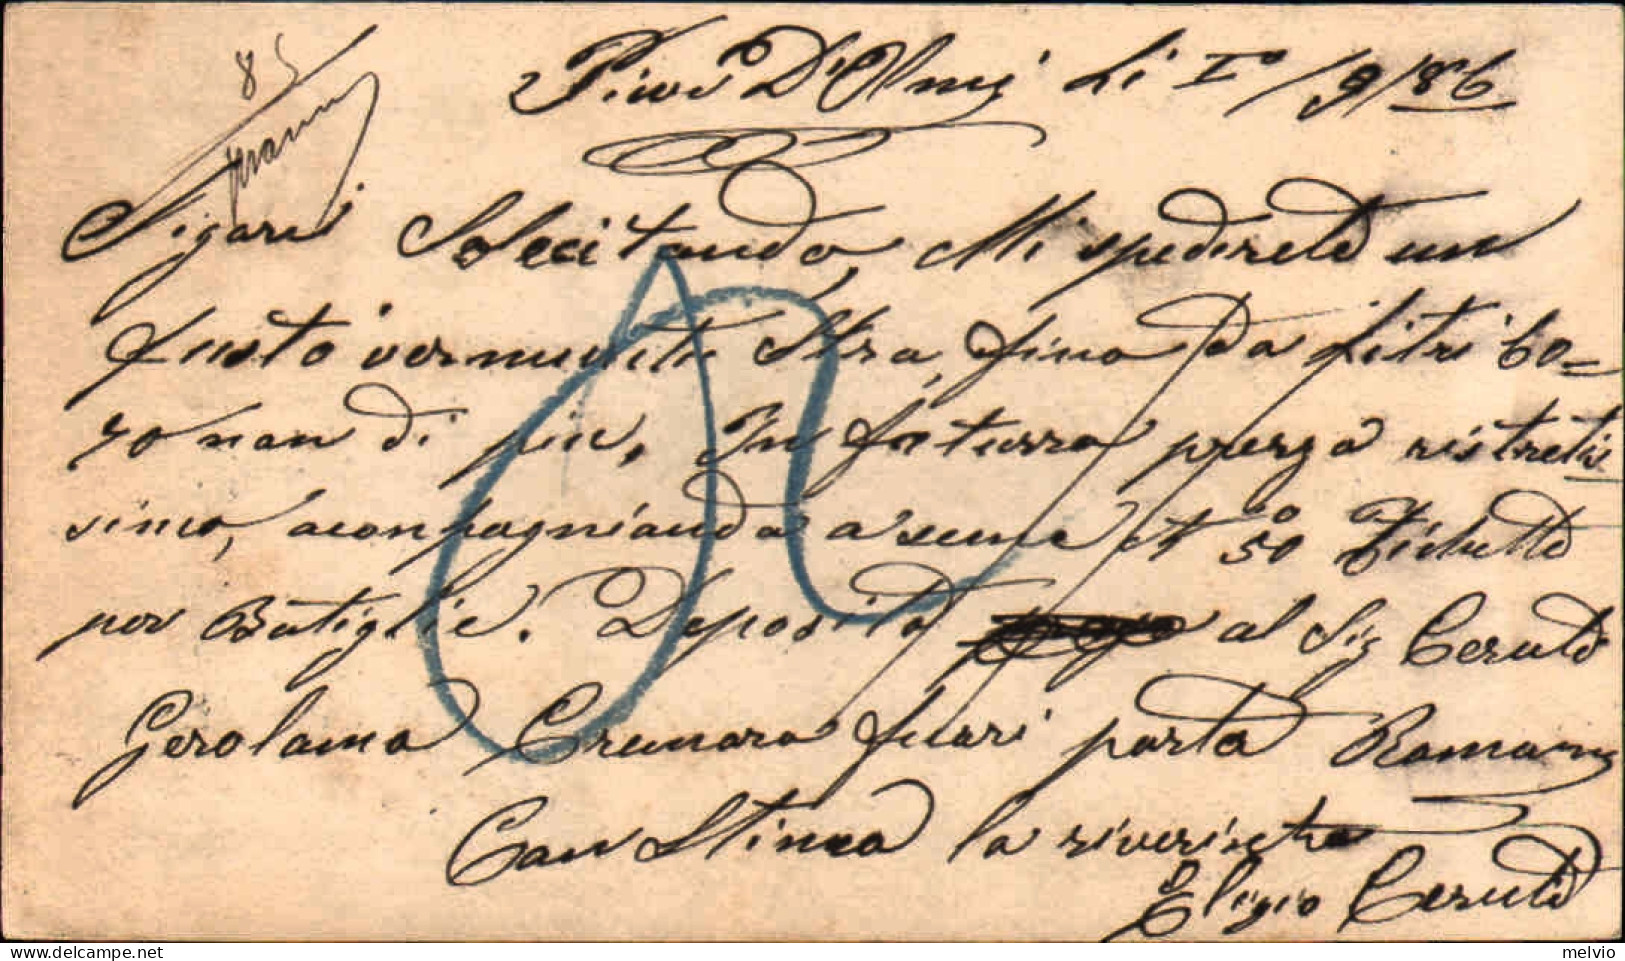 1886-cartolina Postale 10c.Umberto I Ottagonale Di Pieve D'Olmi Cremona - Entiers Postaux